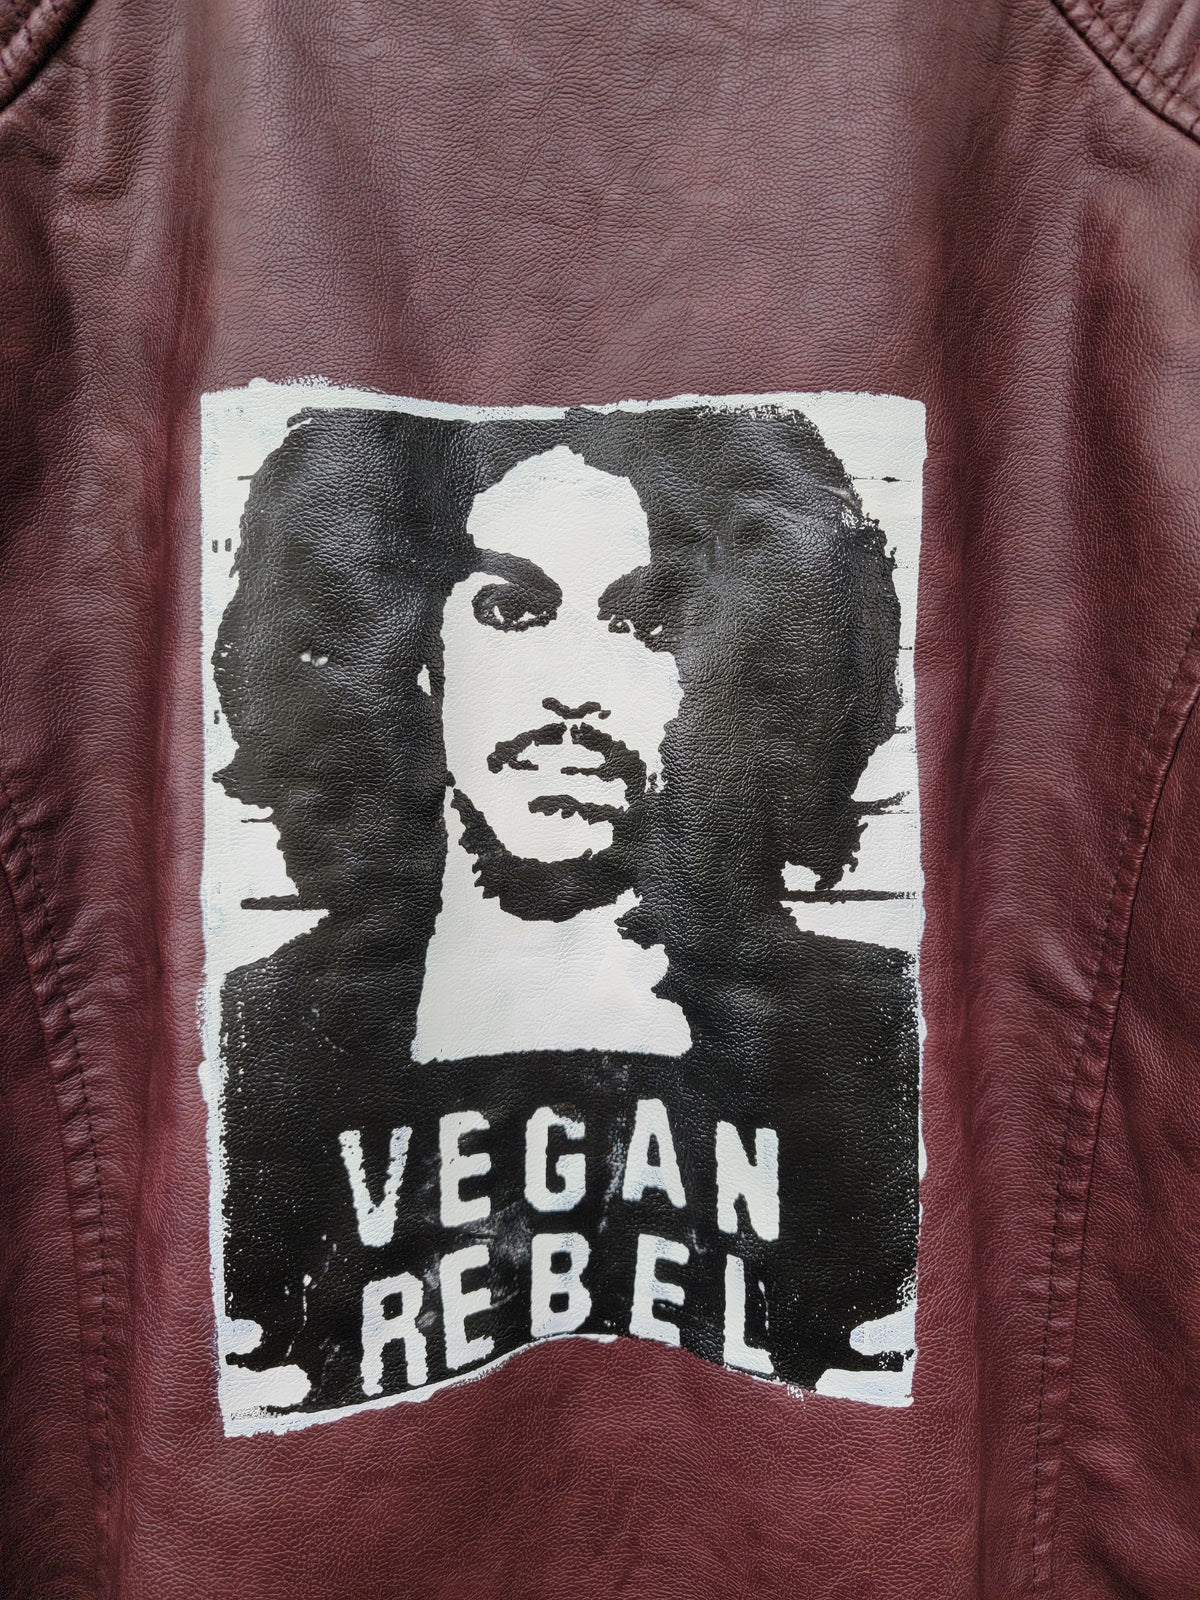 Men's Faux Leather Jacket Vegan Rebel Prince